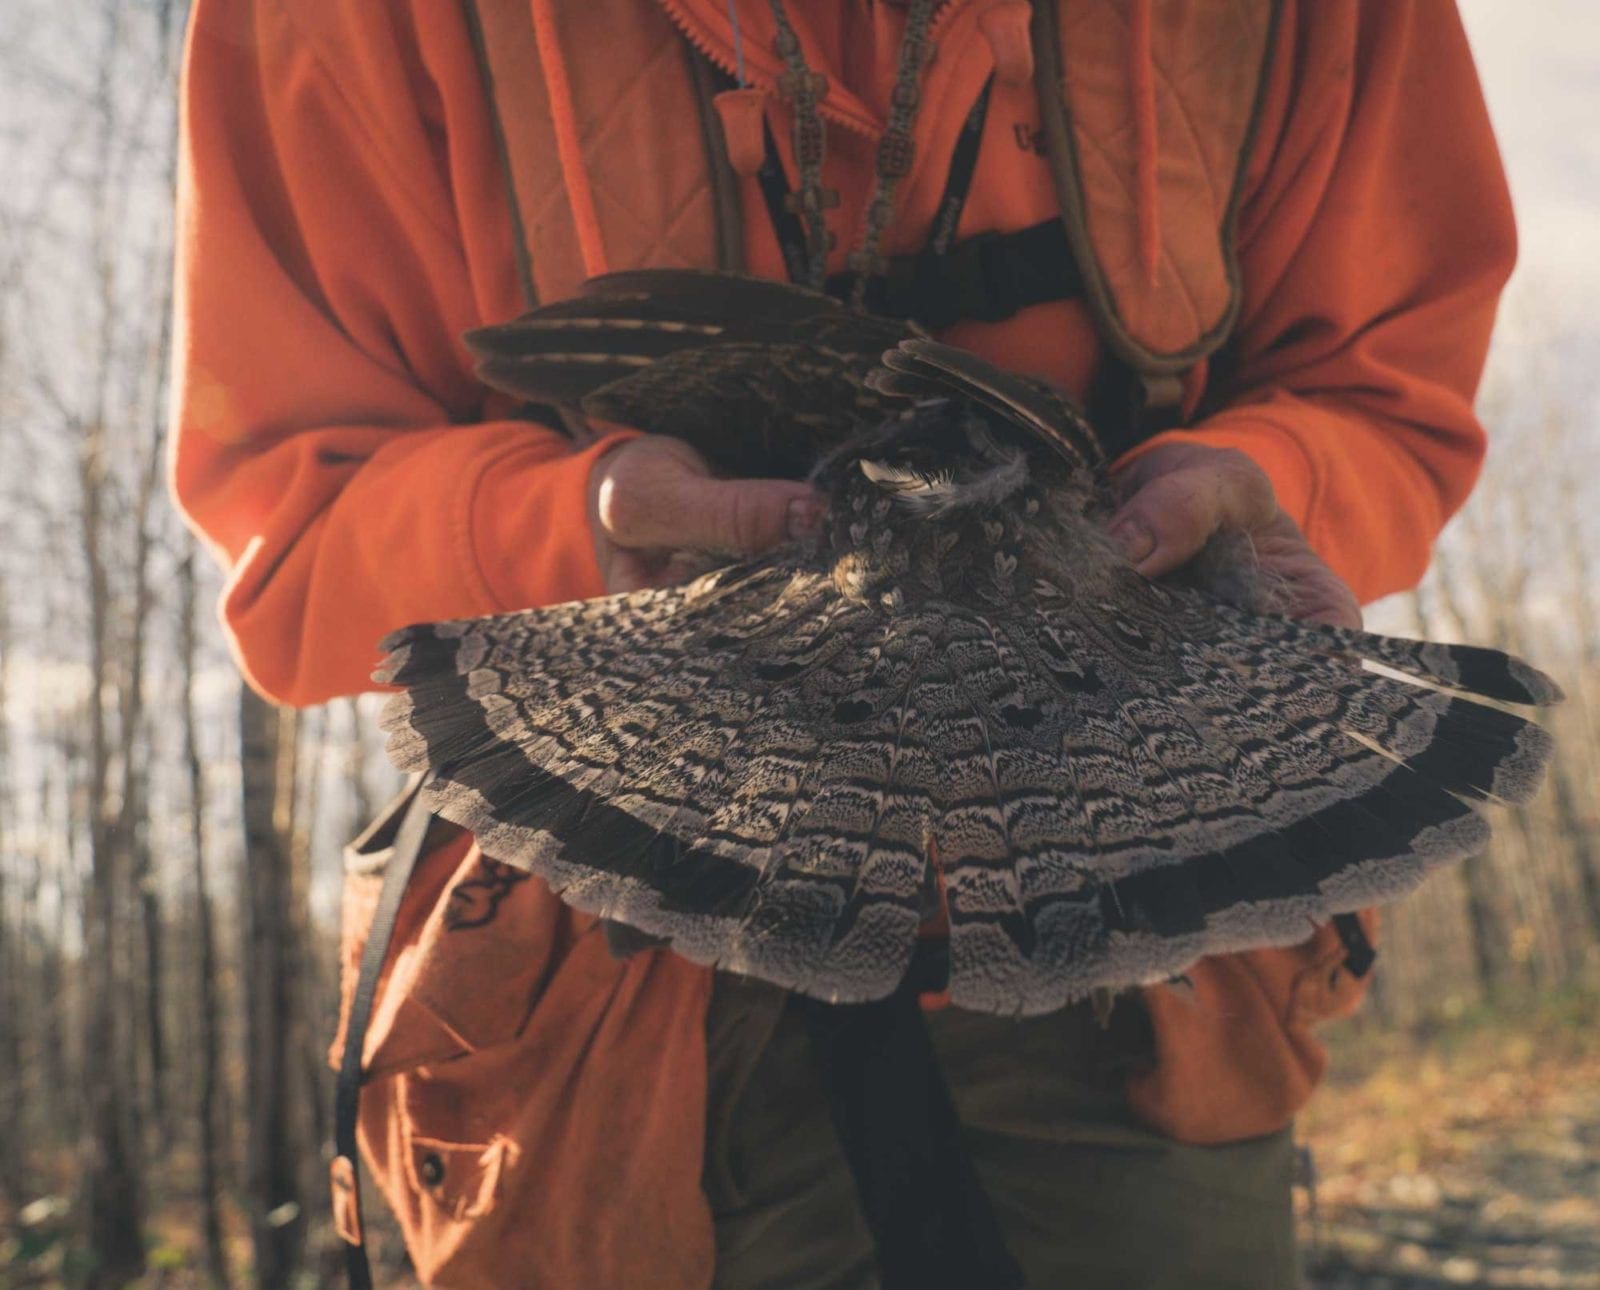 a bird hunter in Maine shows a ruffed grouse fan